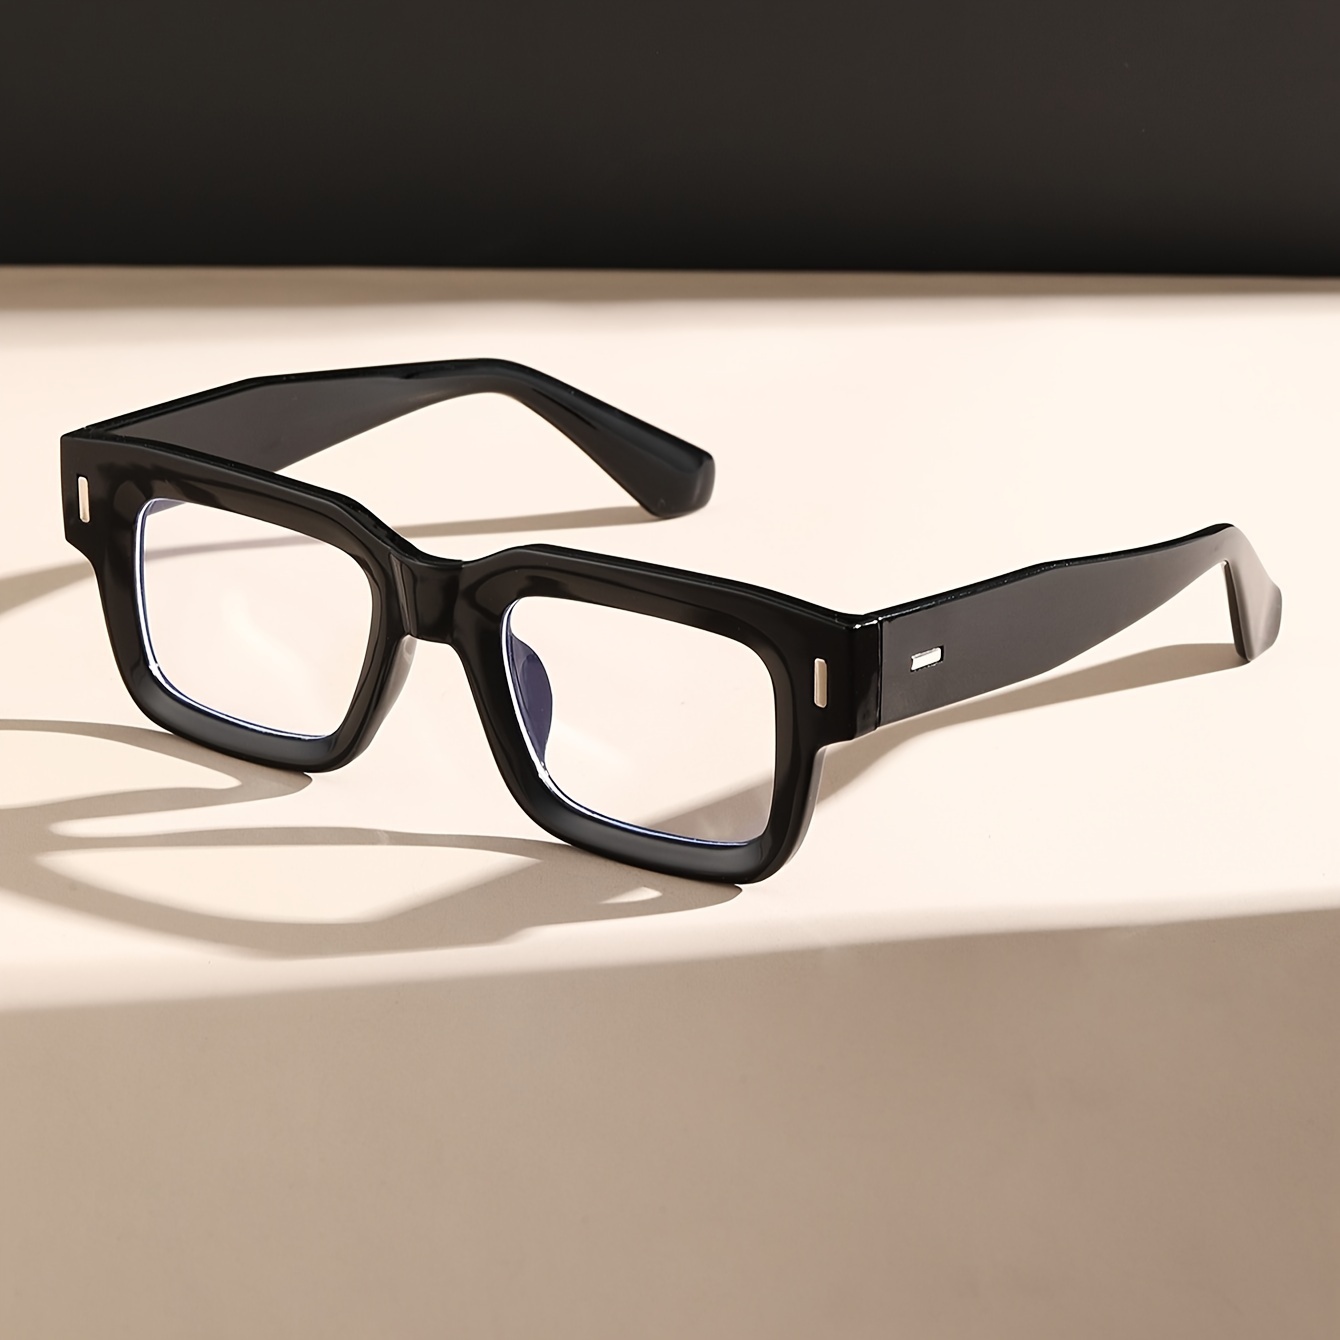 

Square Frame Clear Lens Glasses Retro Fashion Decorative Glasses Minimalist Spectacles For Women Men